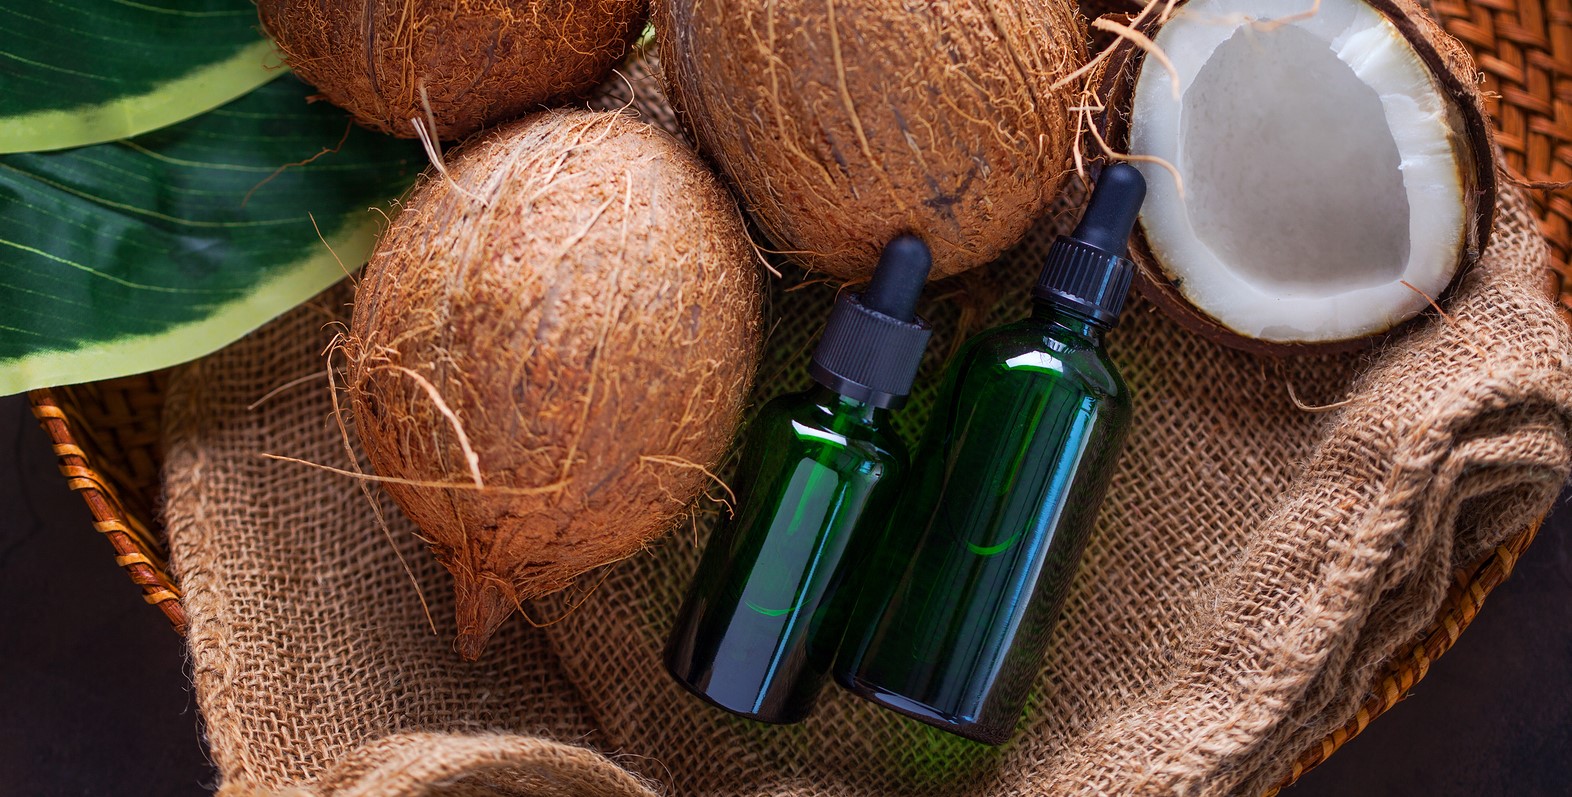 Kokosový olej ošetruje pokožku, obsahuje mastné kyseliny a polyfenoly